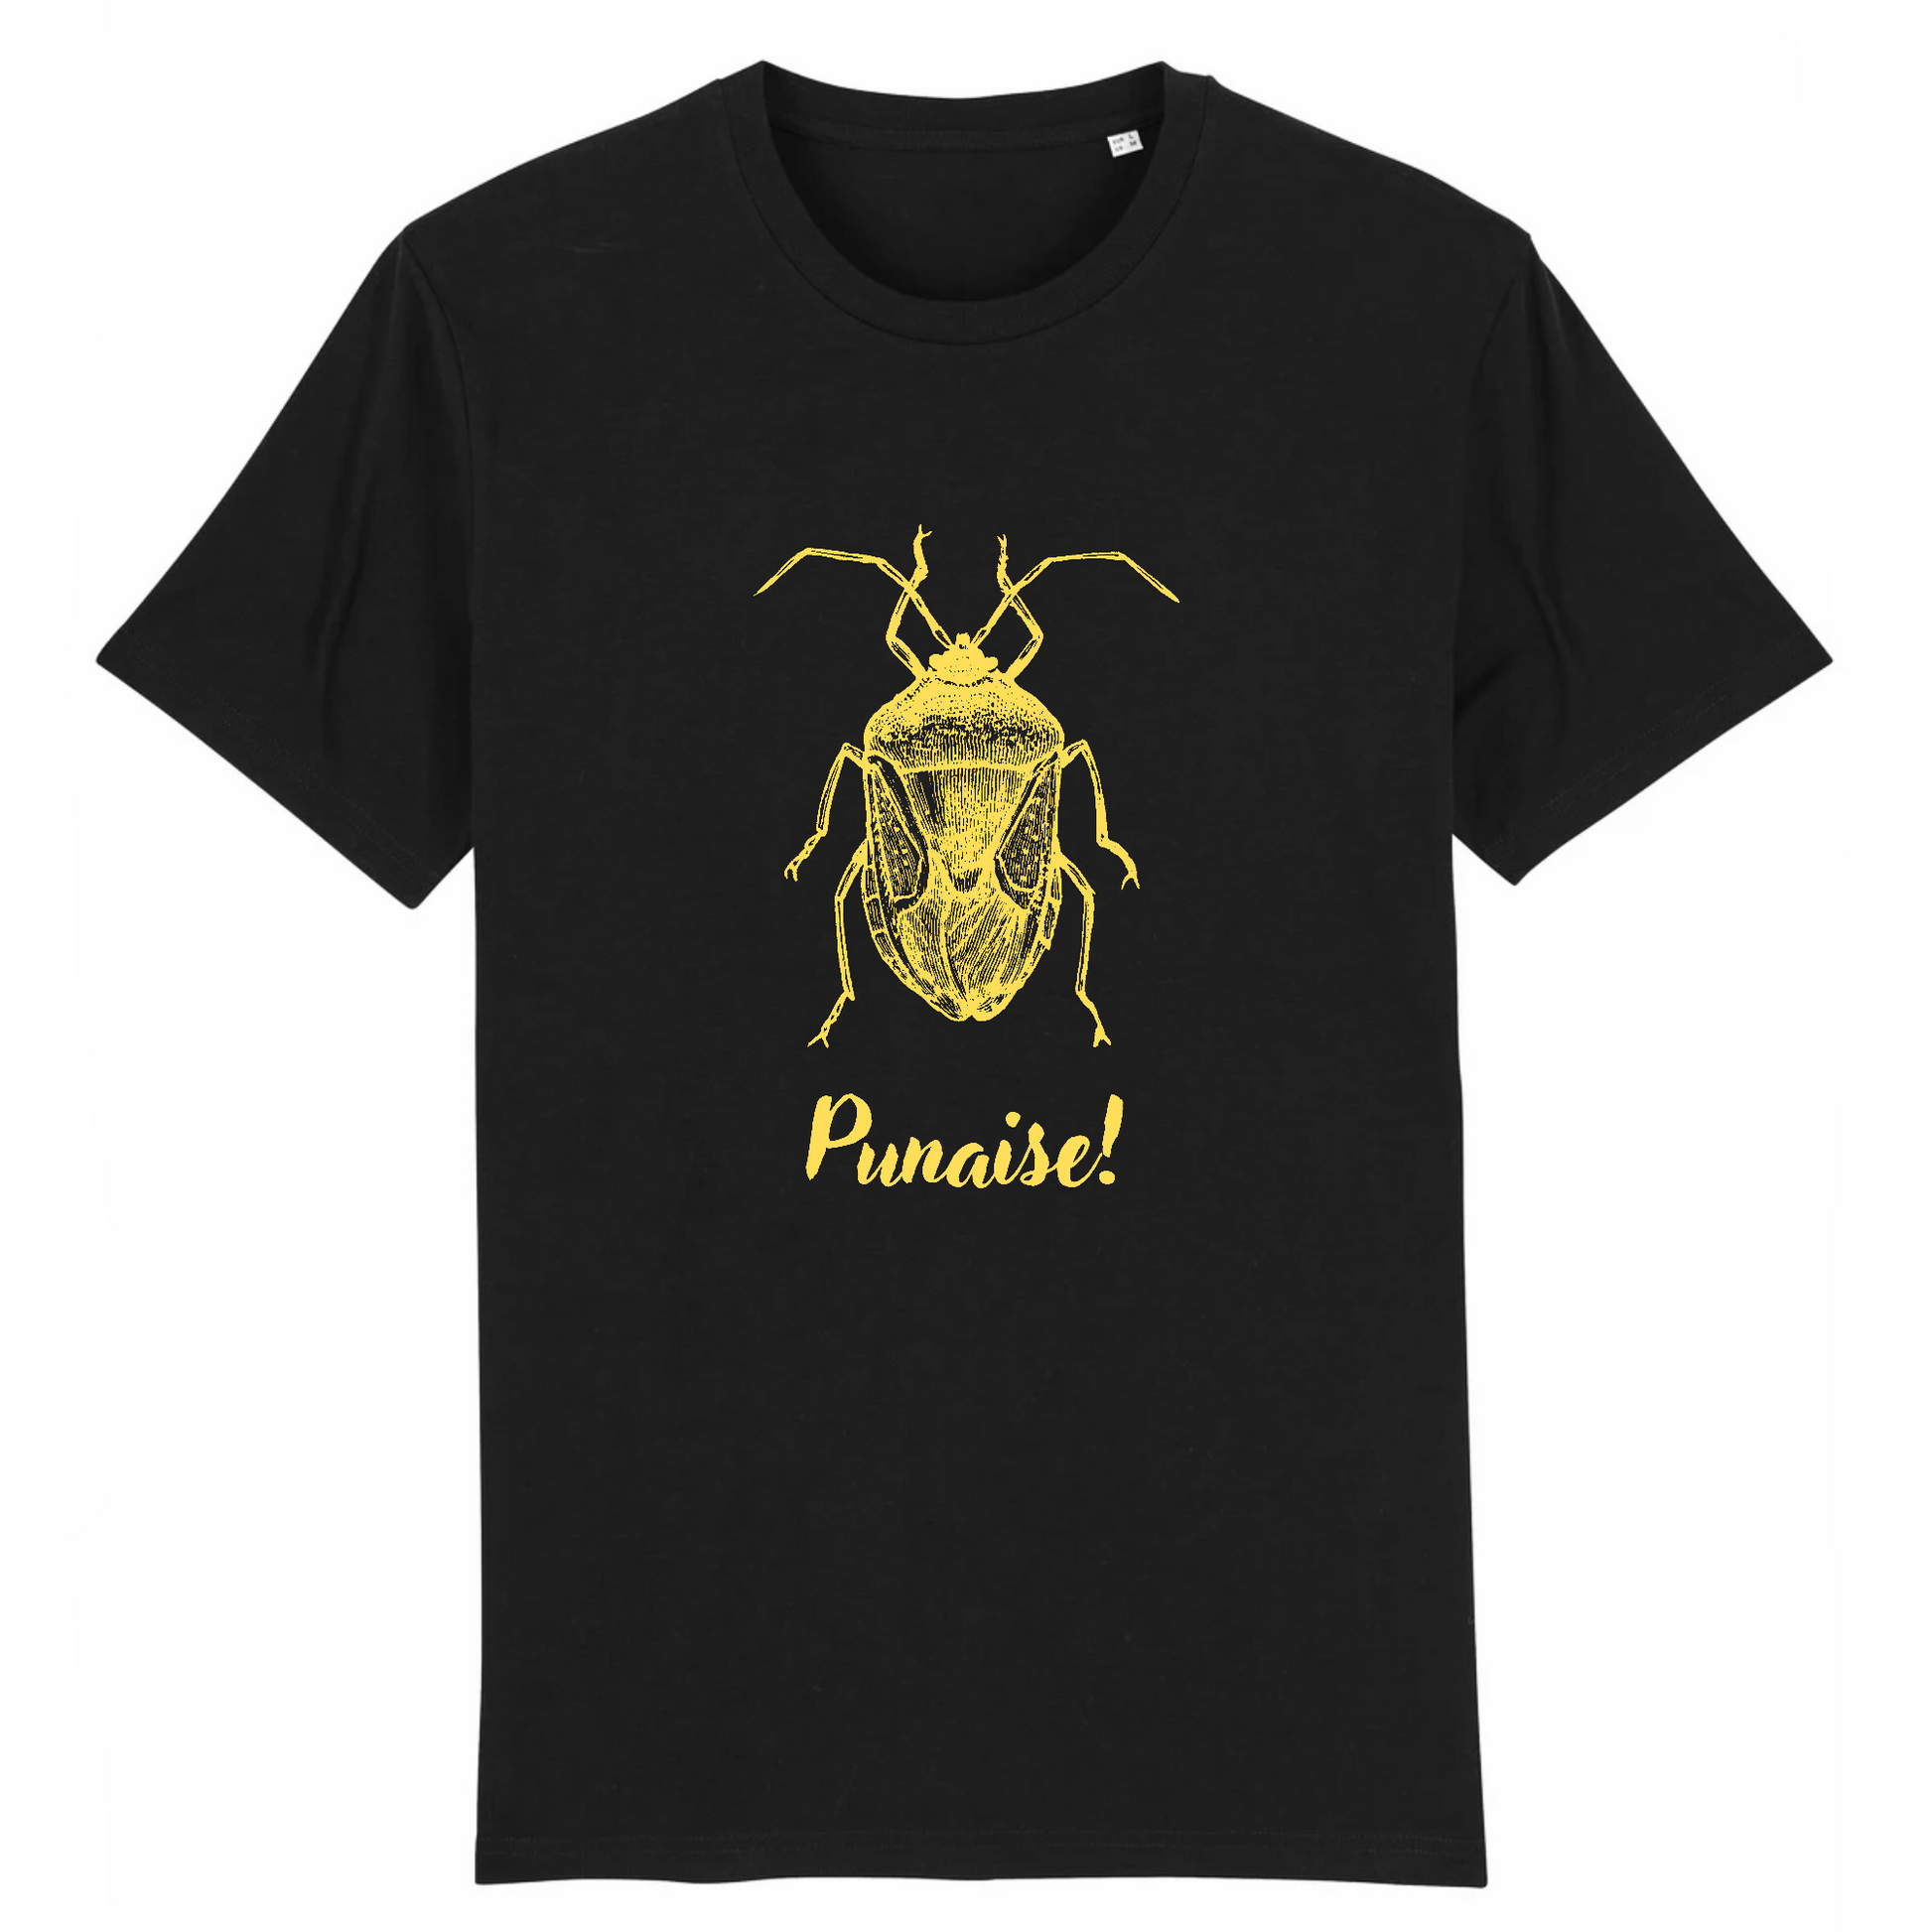 Punaise! | T-shirt Unisexe - Coton BIO - CREATOR | Noir